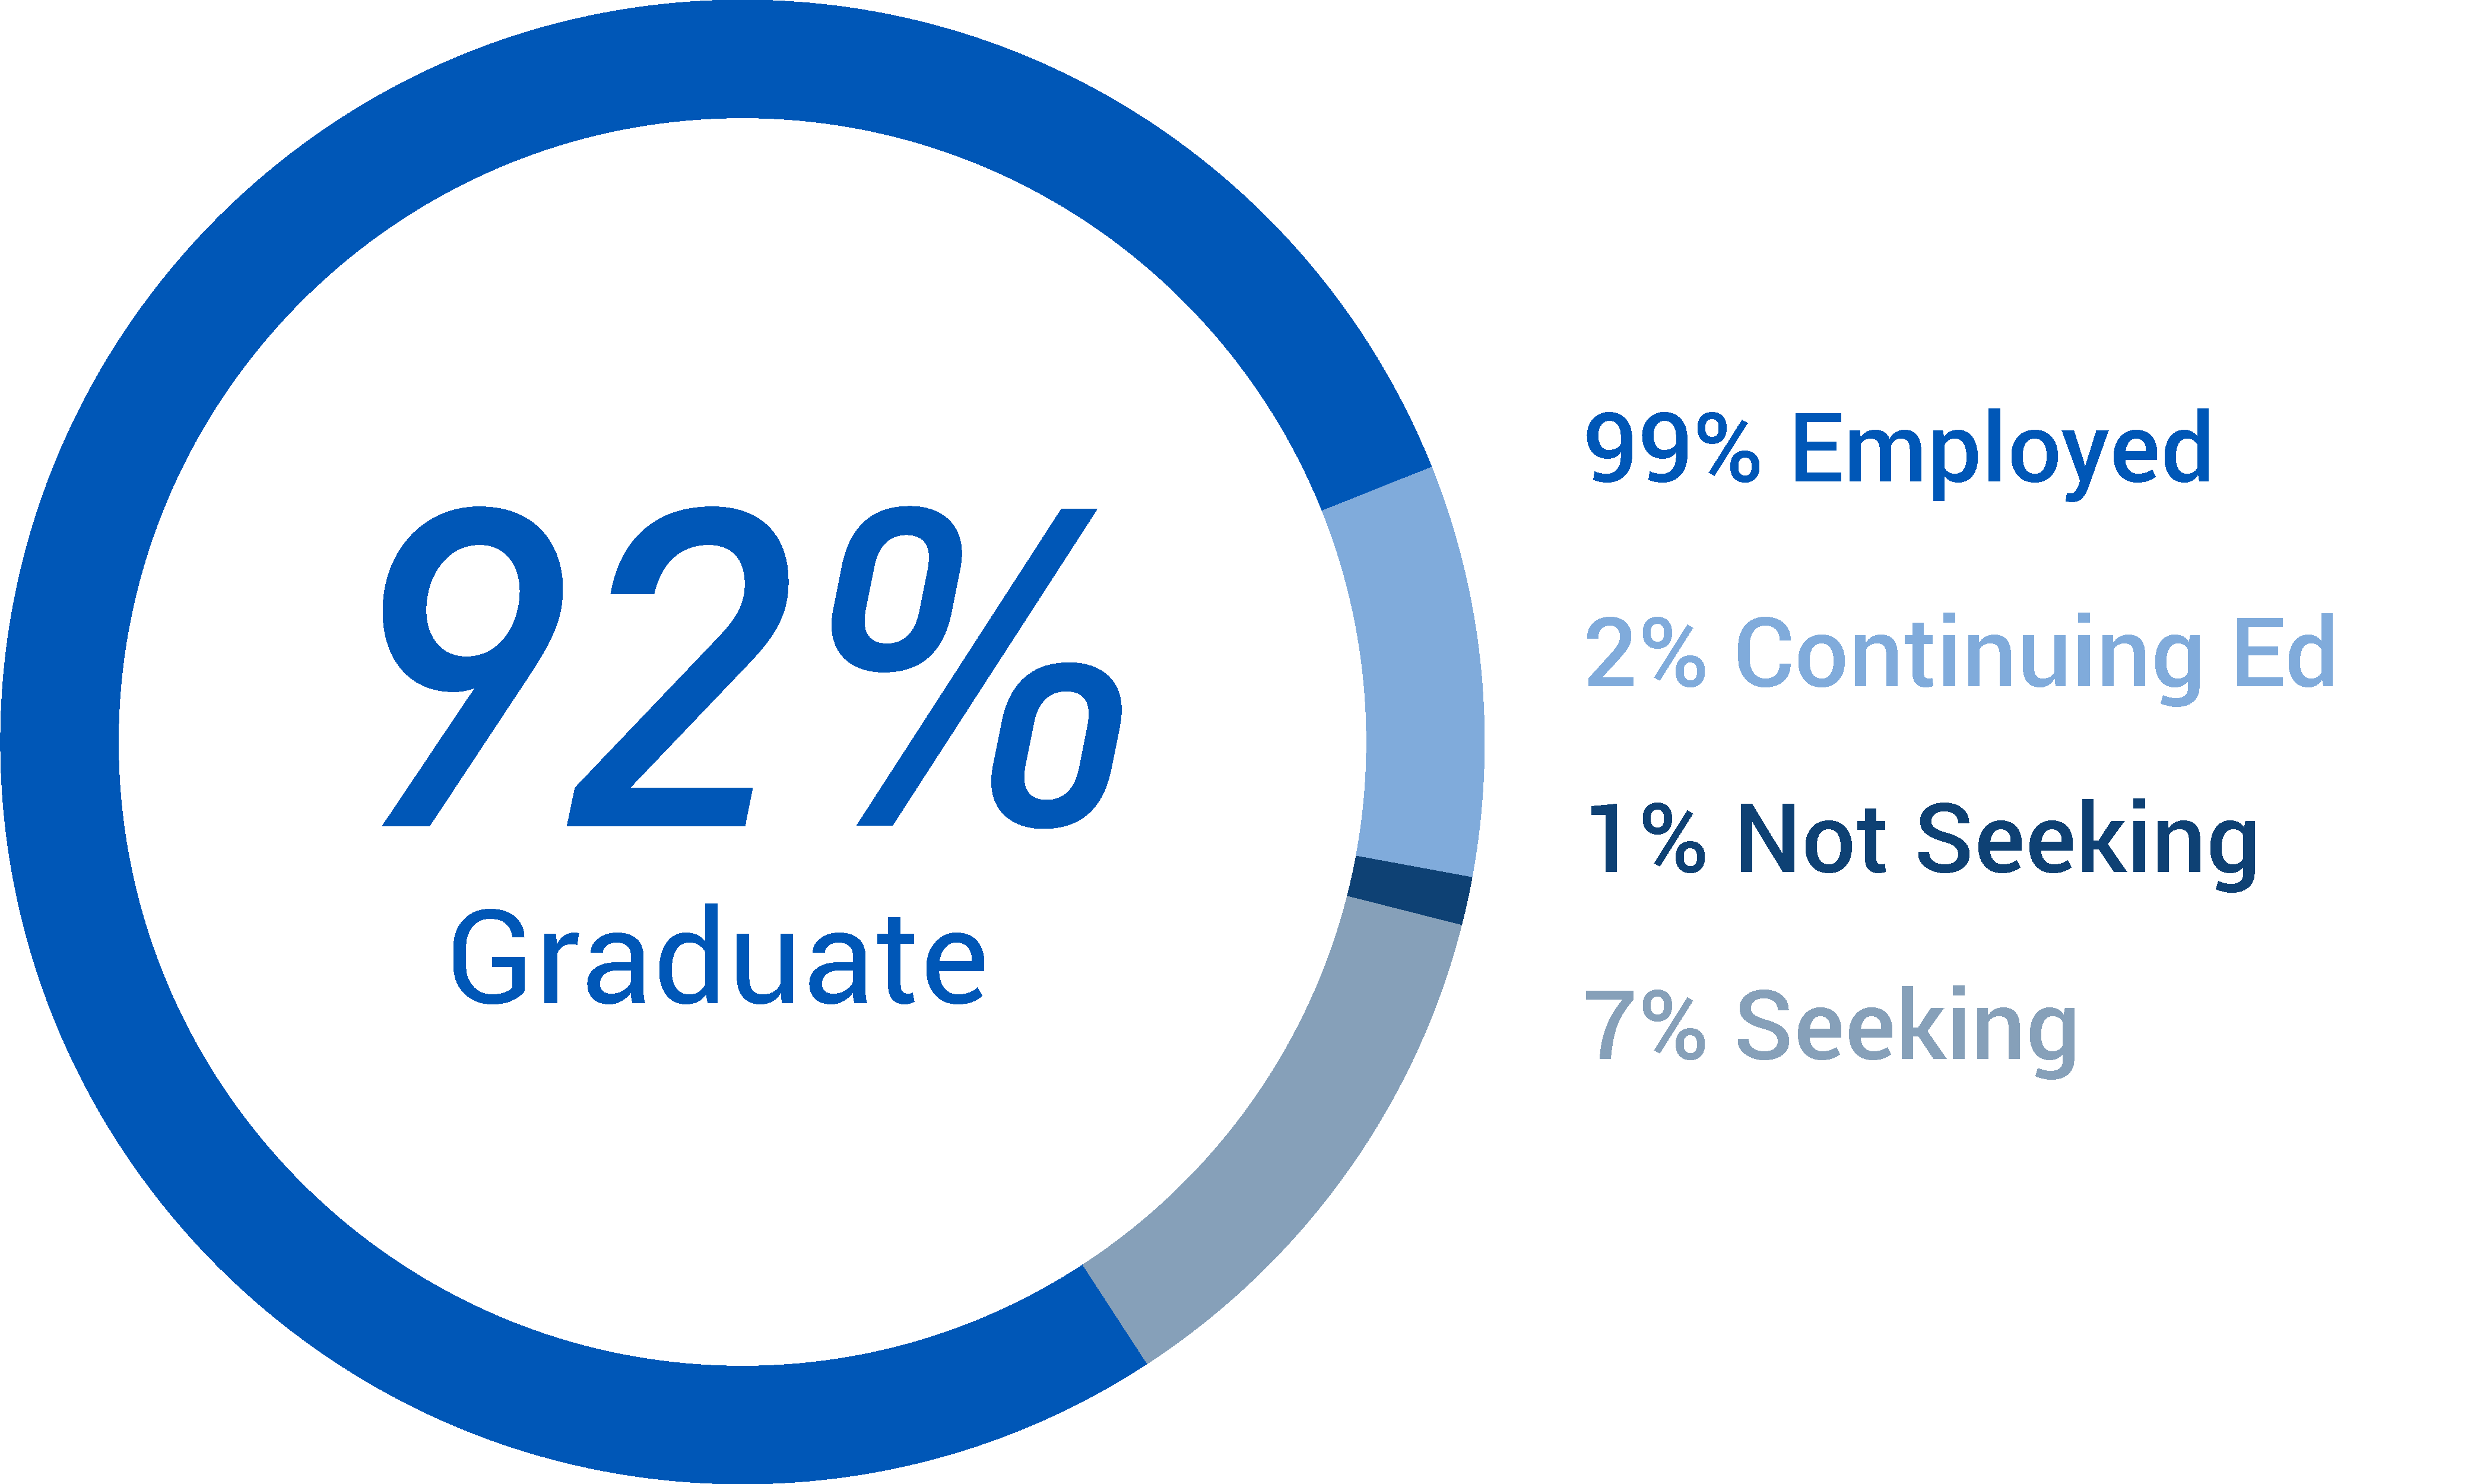 92% of graduate students employed